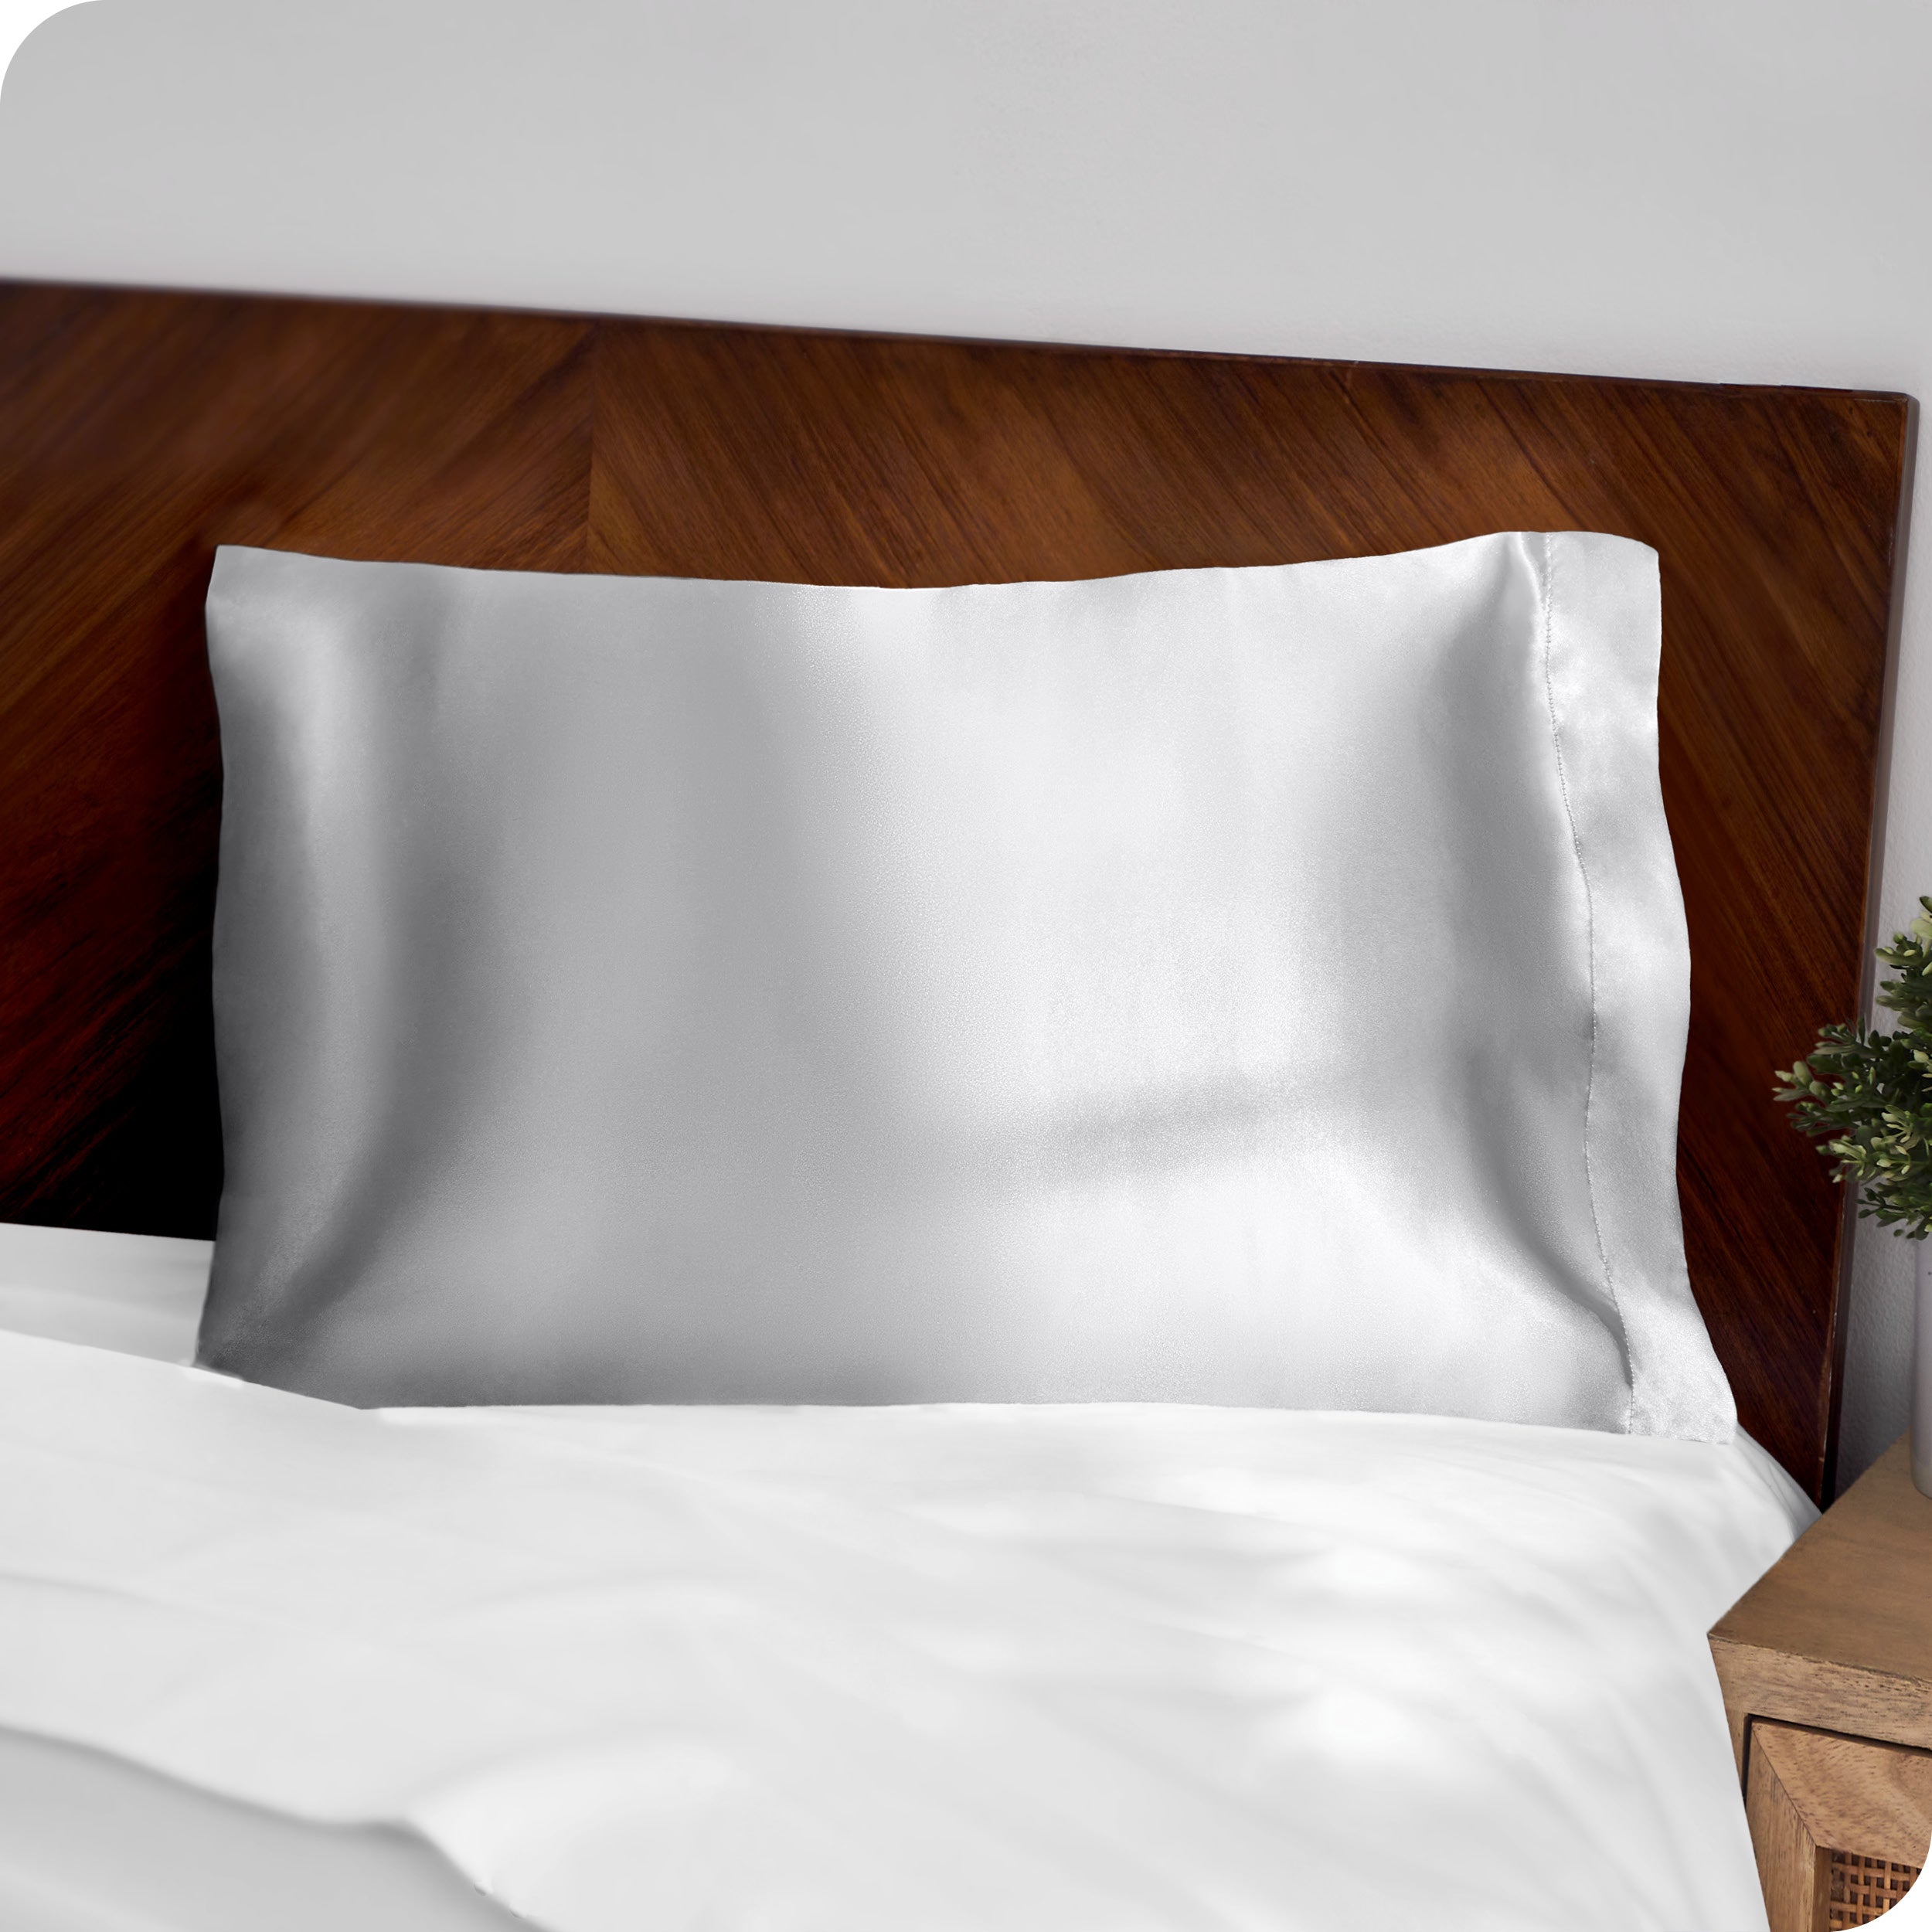 A silver silk pillowcase on a pillow resting on a headboard